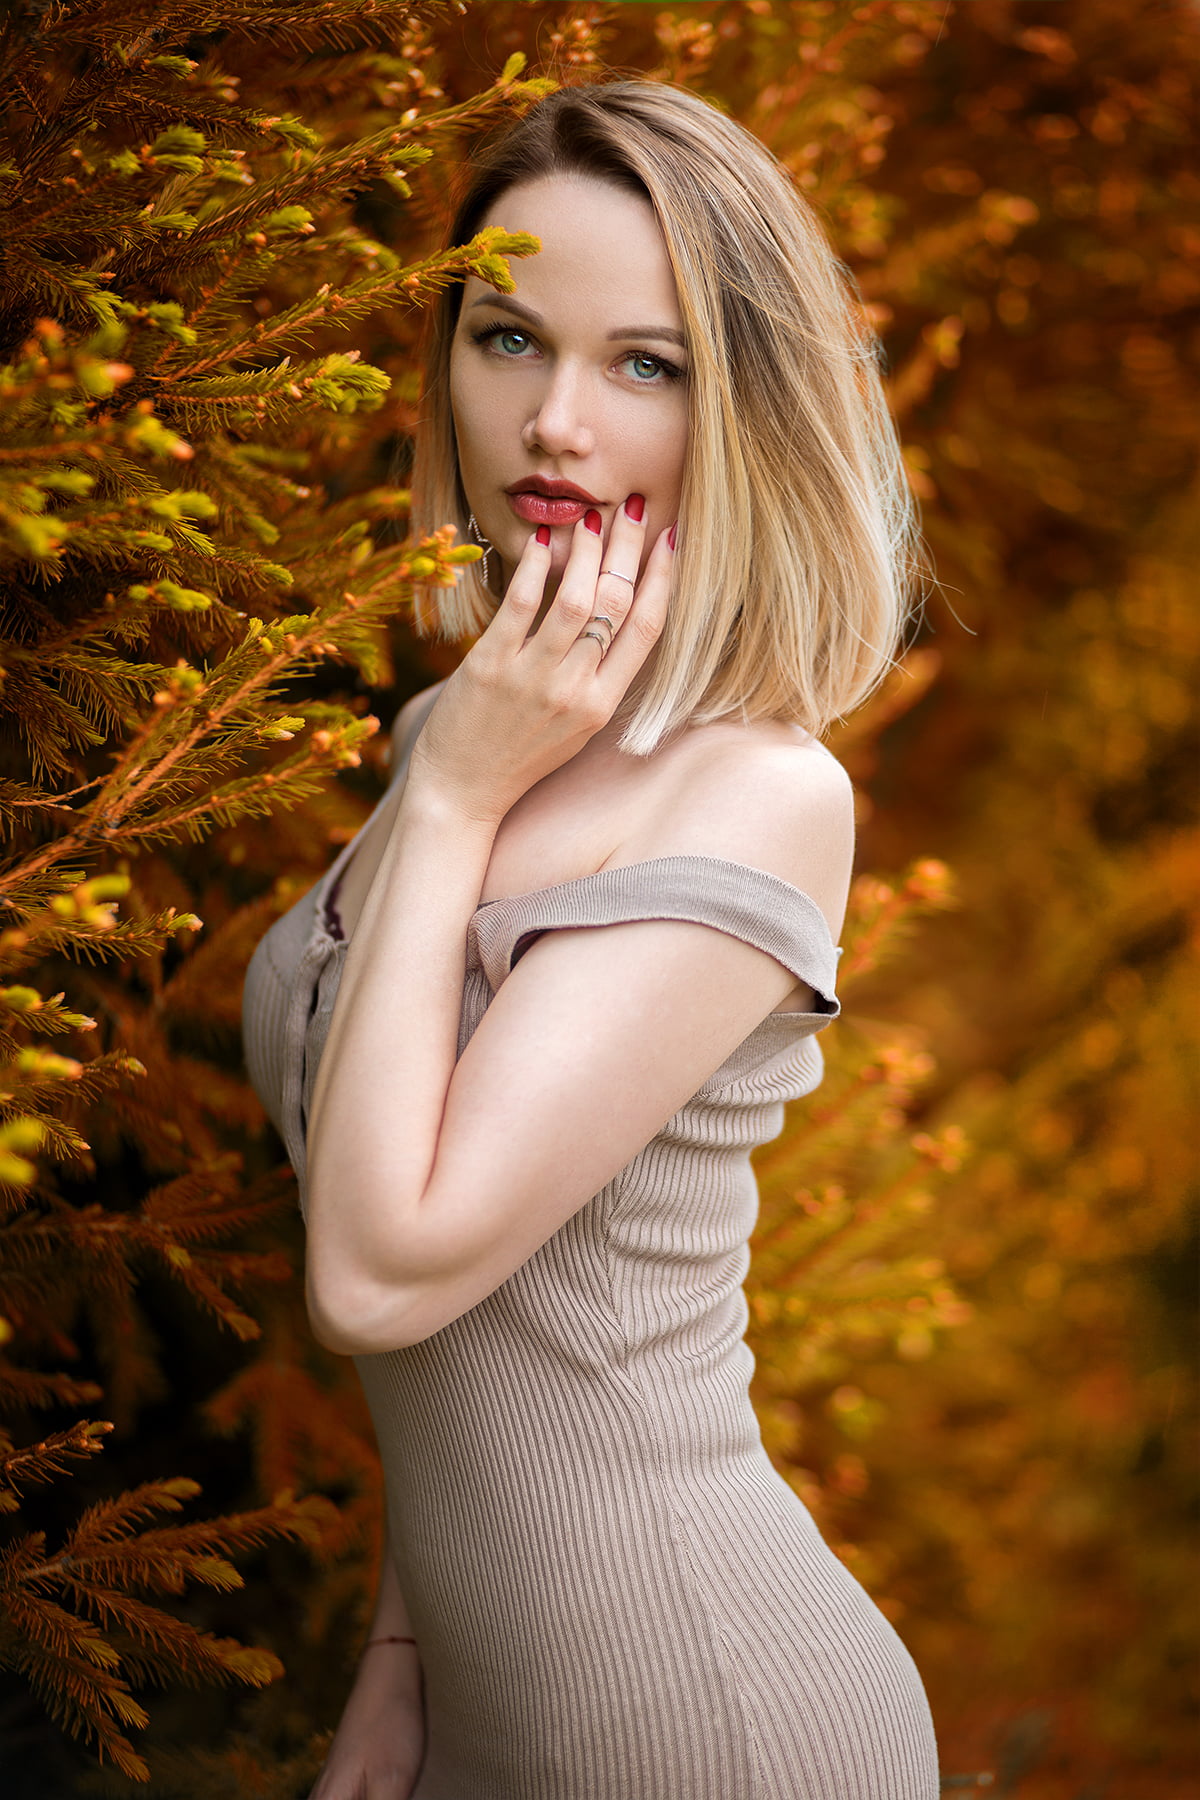 Free Download Hd Wallpaper Women Model Portrait Display Blonde Looking At Viewer Red